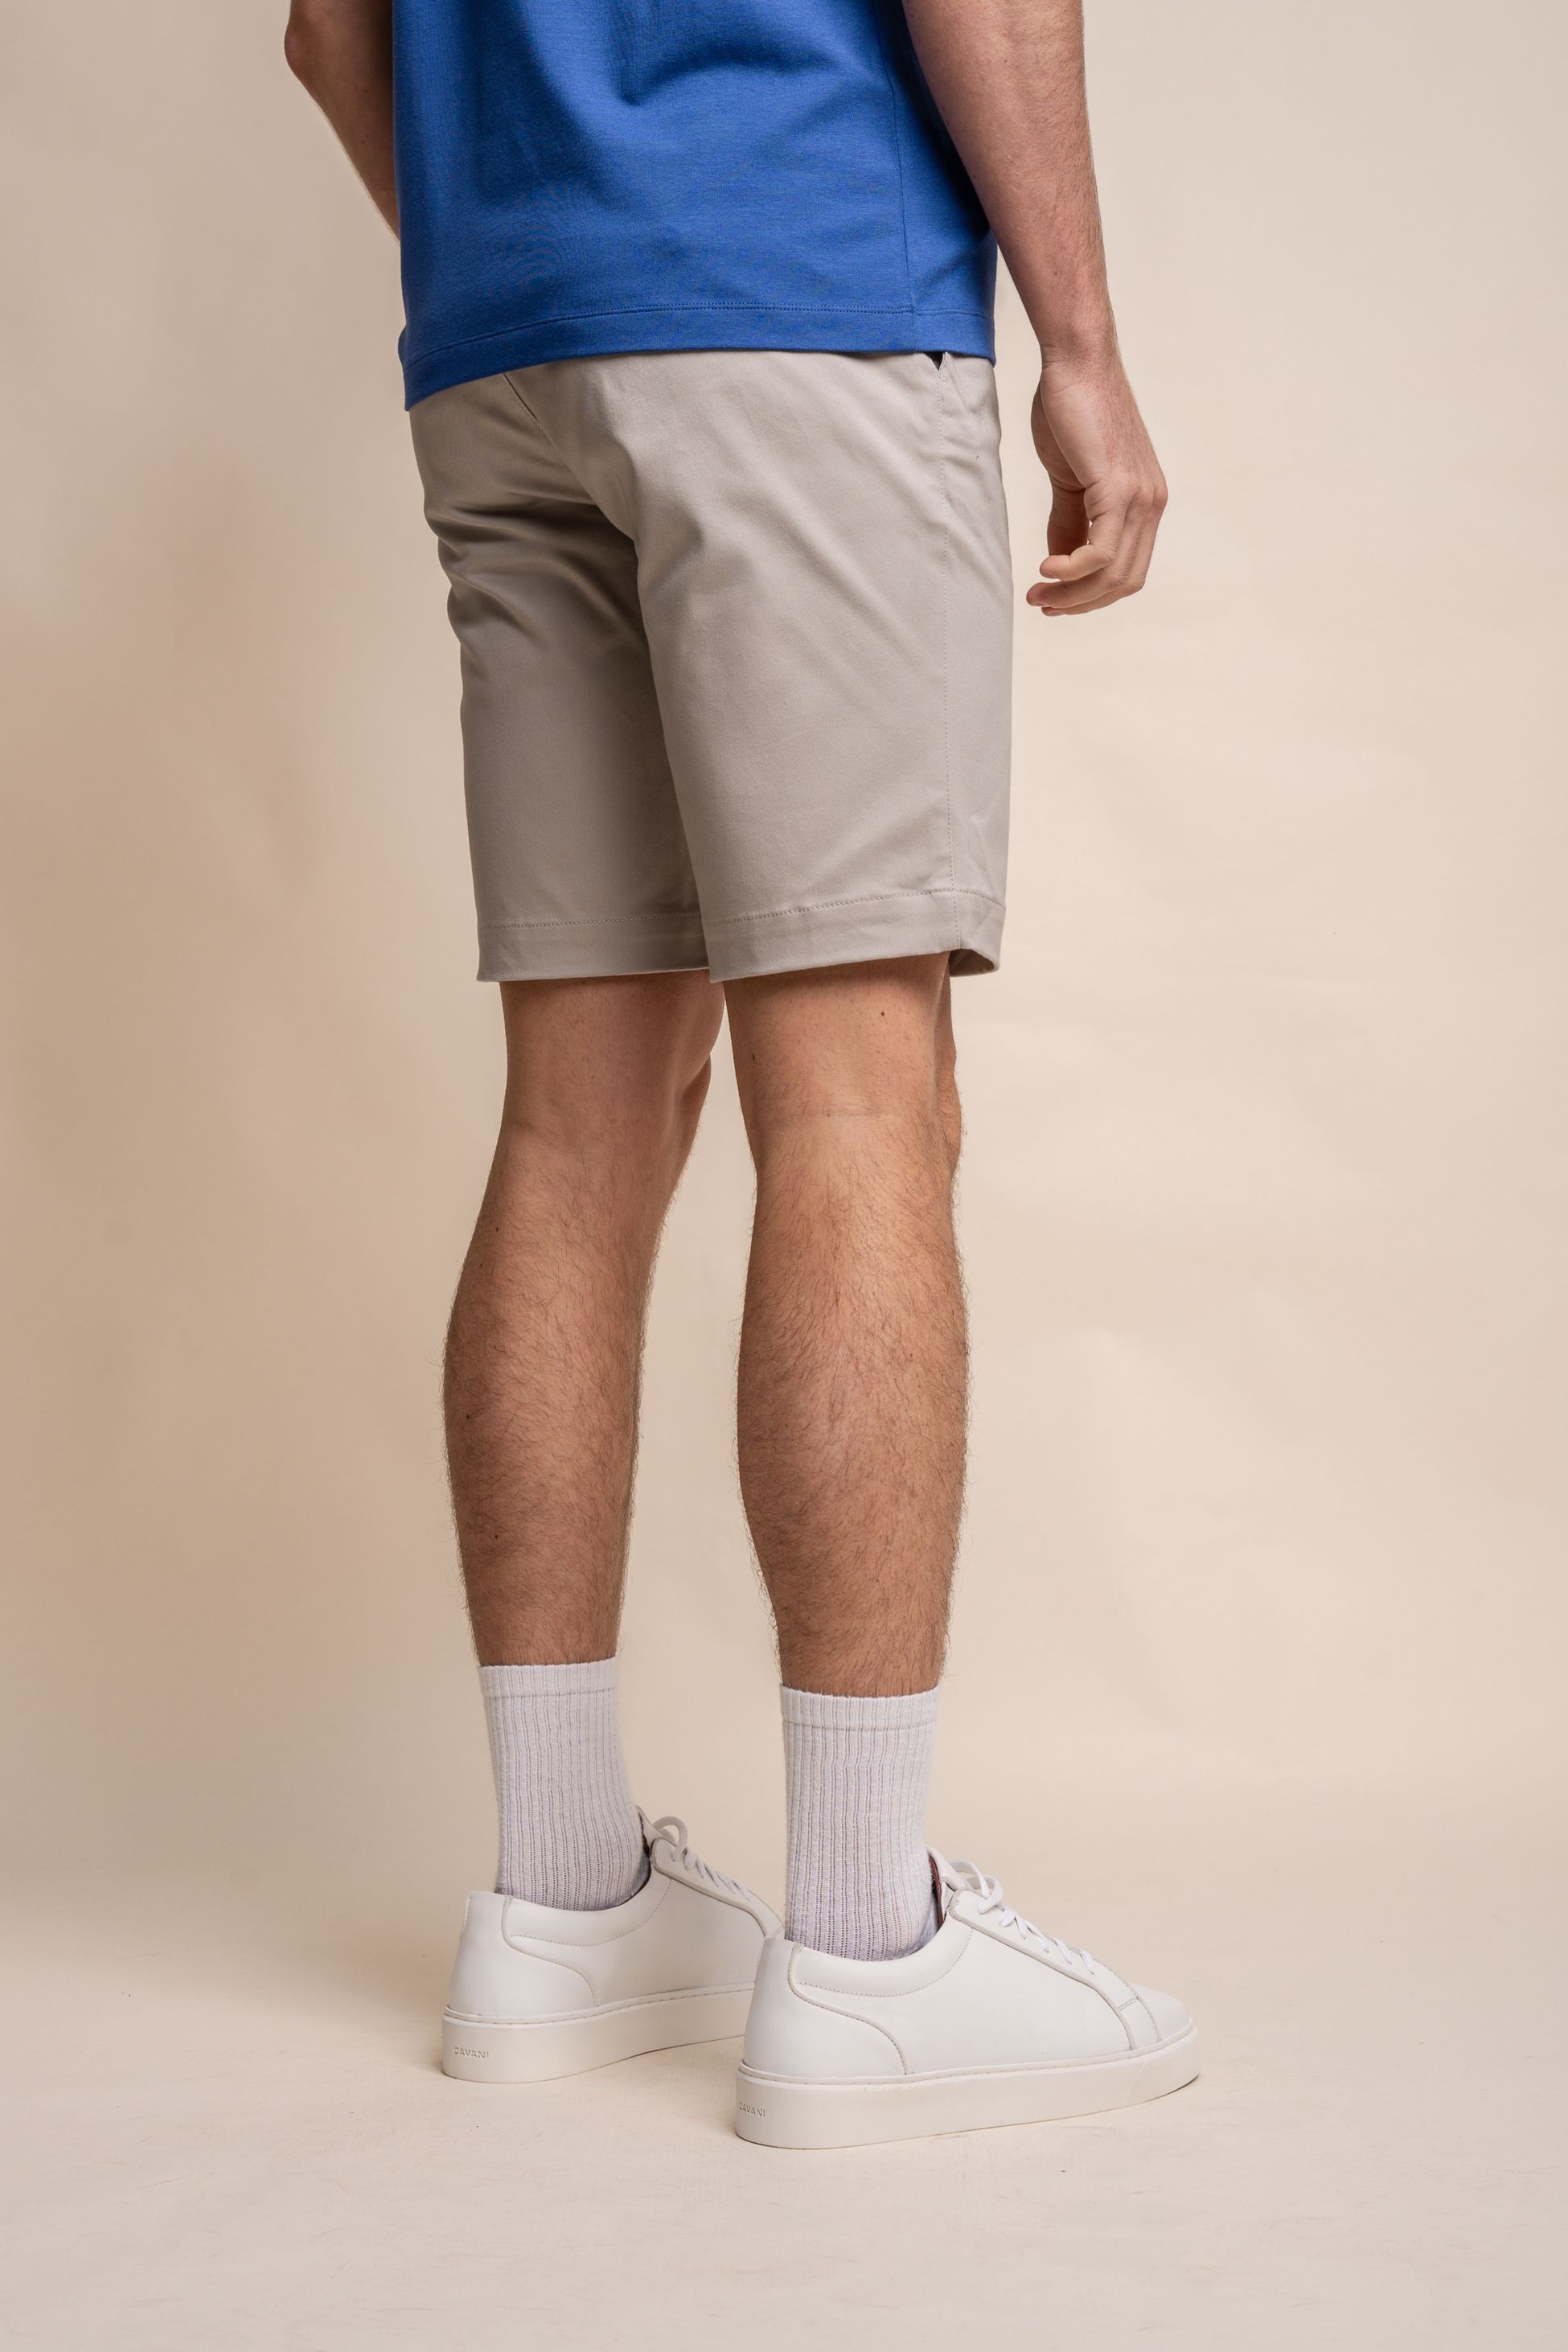 Herren Casual Slim Fit Chino Shorts aus Baumwolle - DAKOTA - Schiefergrau